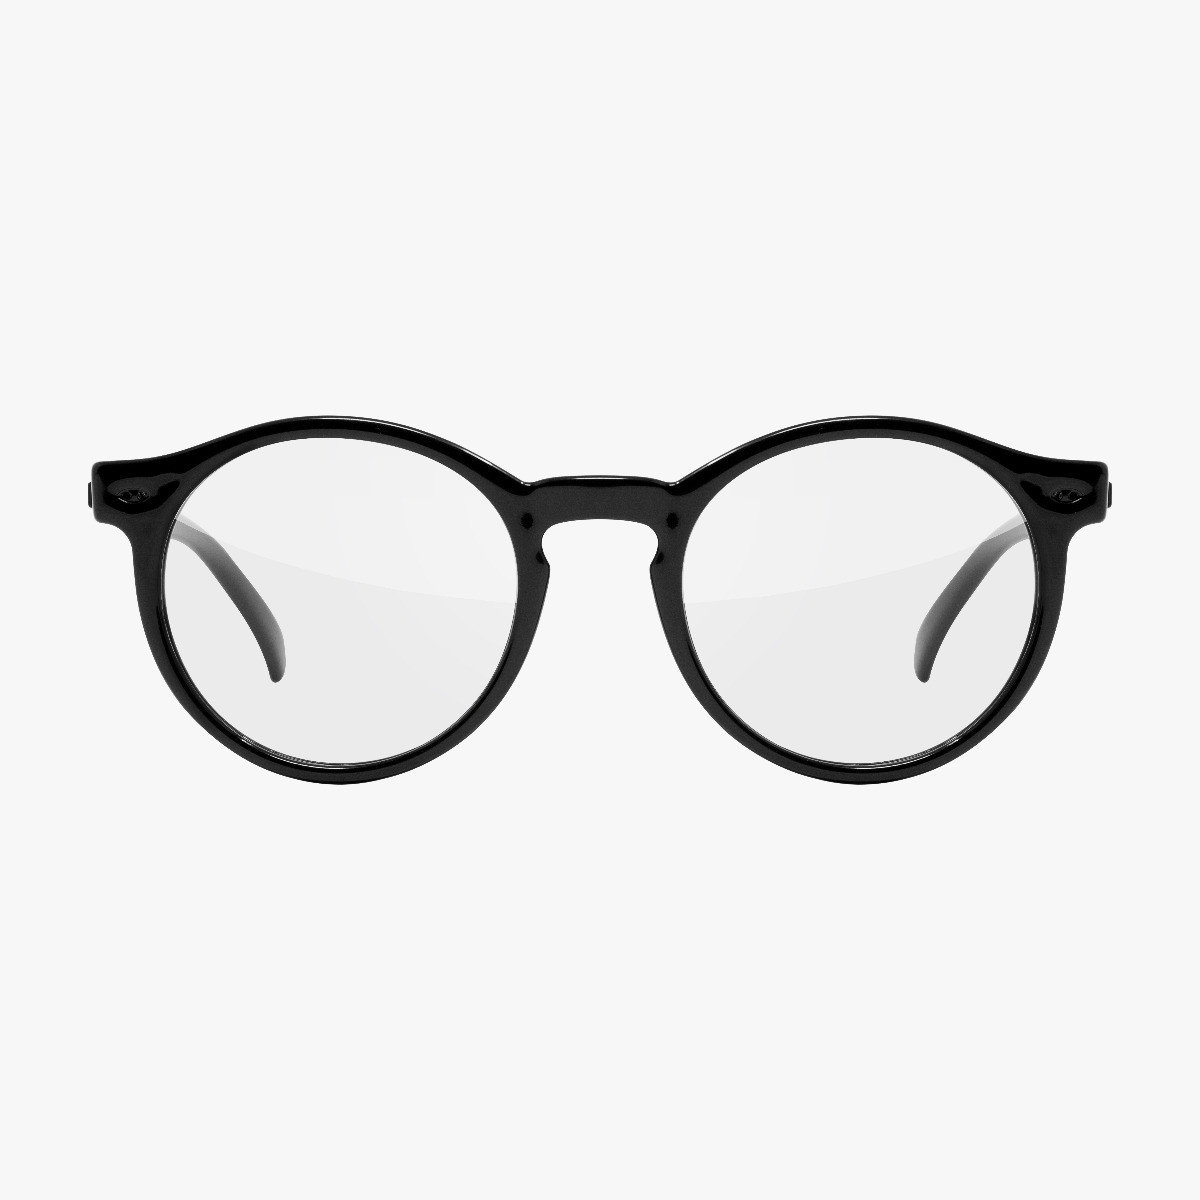 protox eyewear rx frame black gloss ey23020206